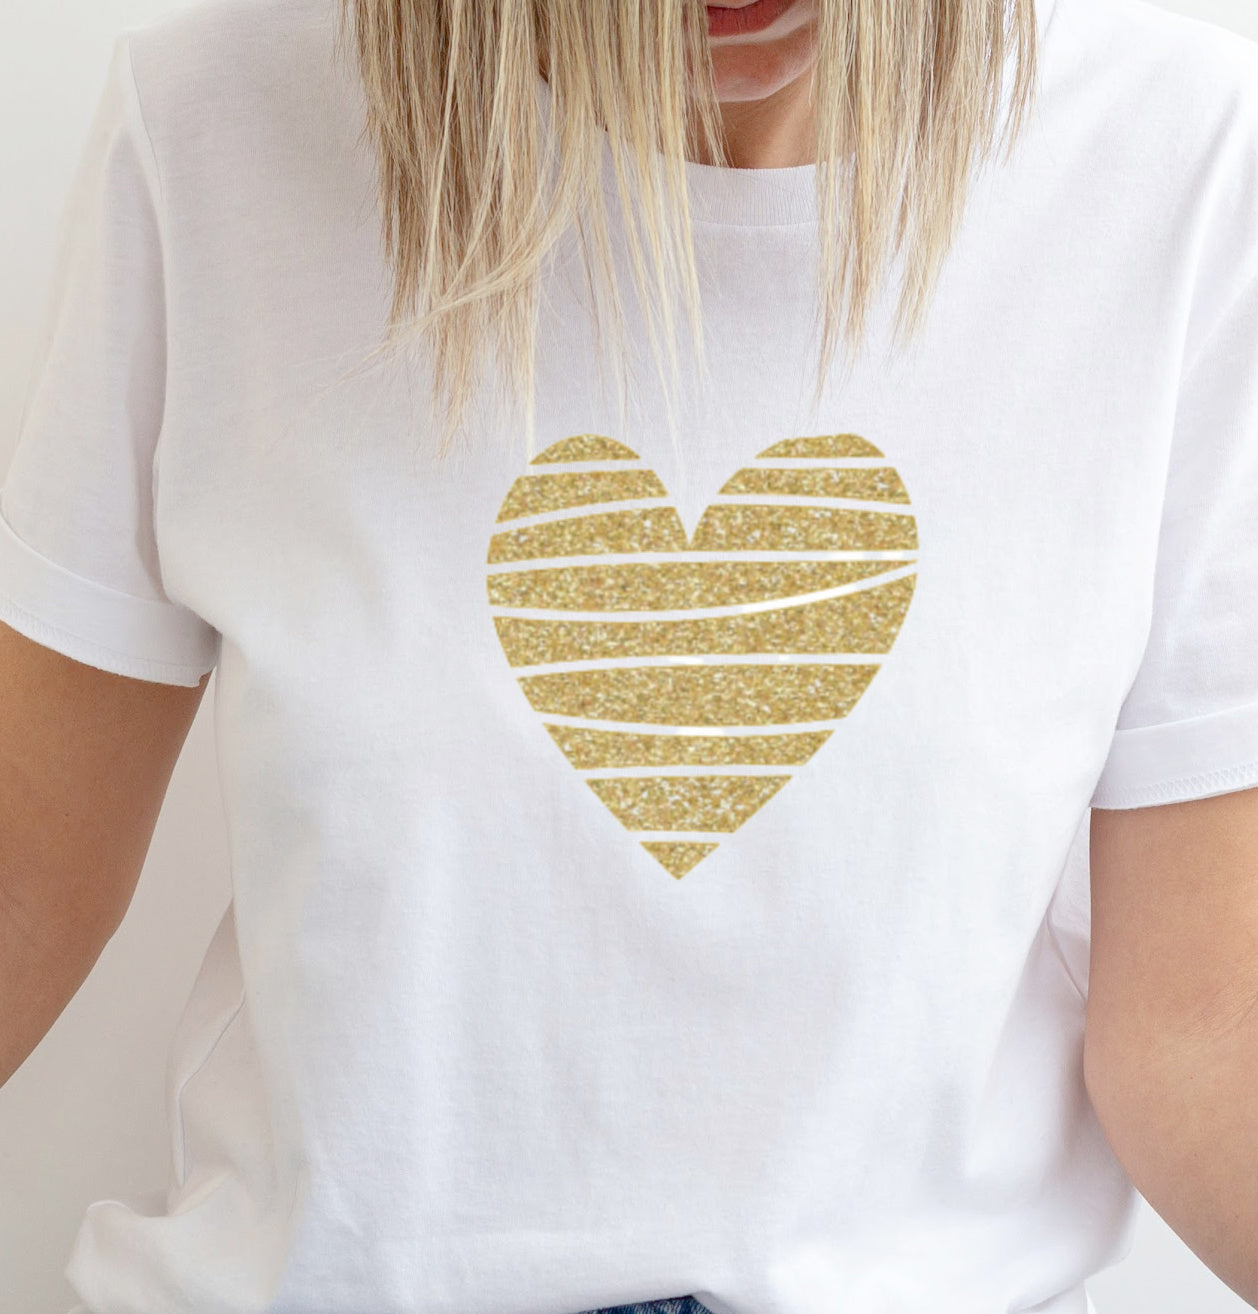 White T-Shirt with Gold Glitter Heart - Size XL - UK20 (43")